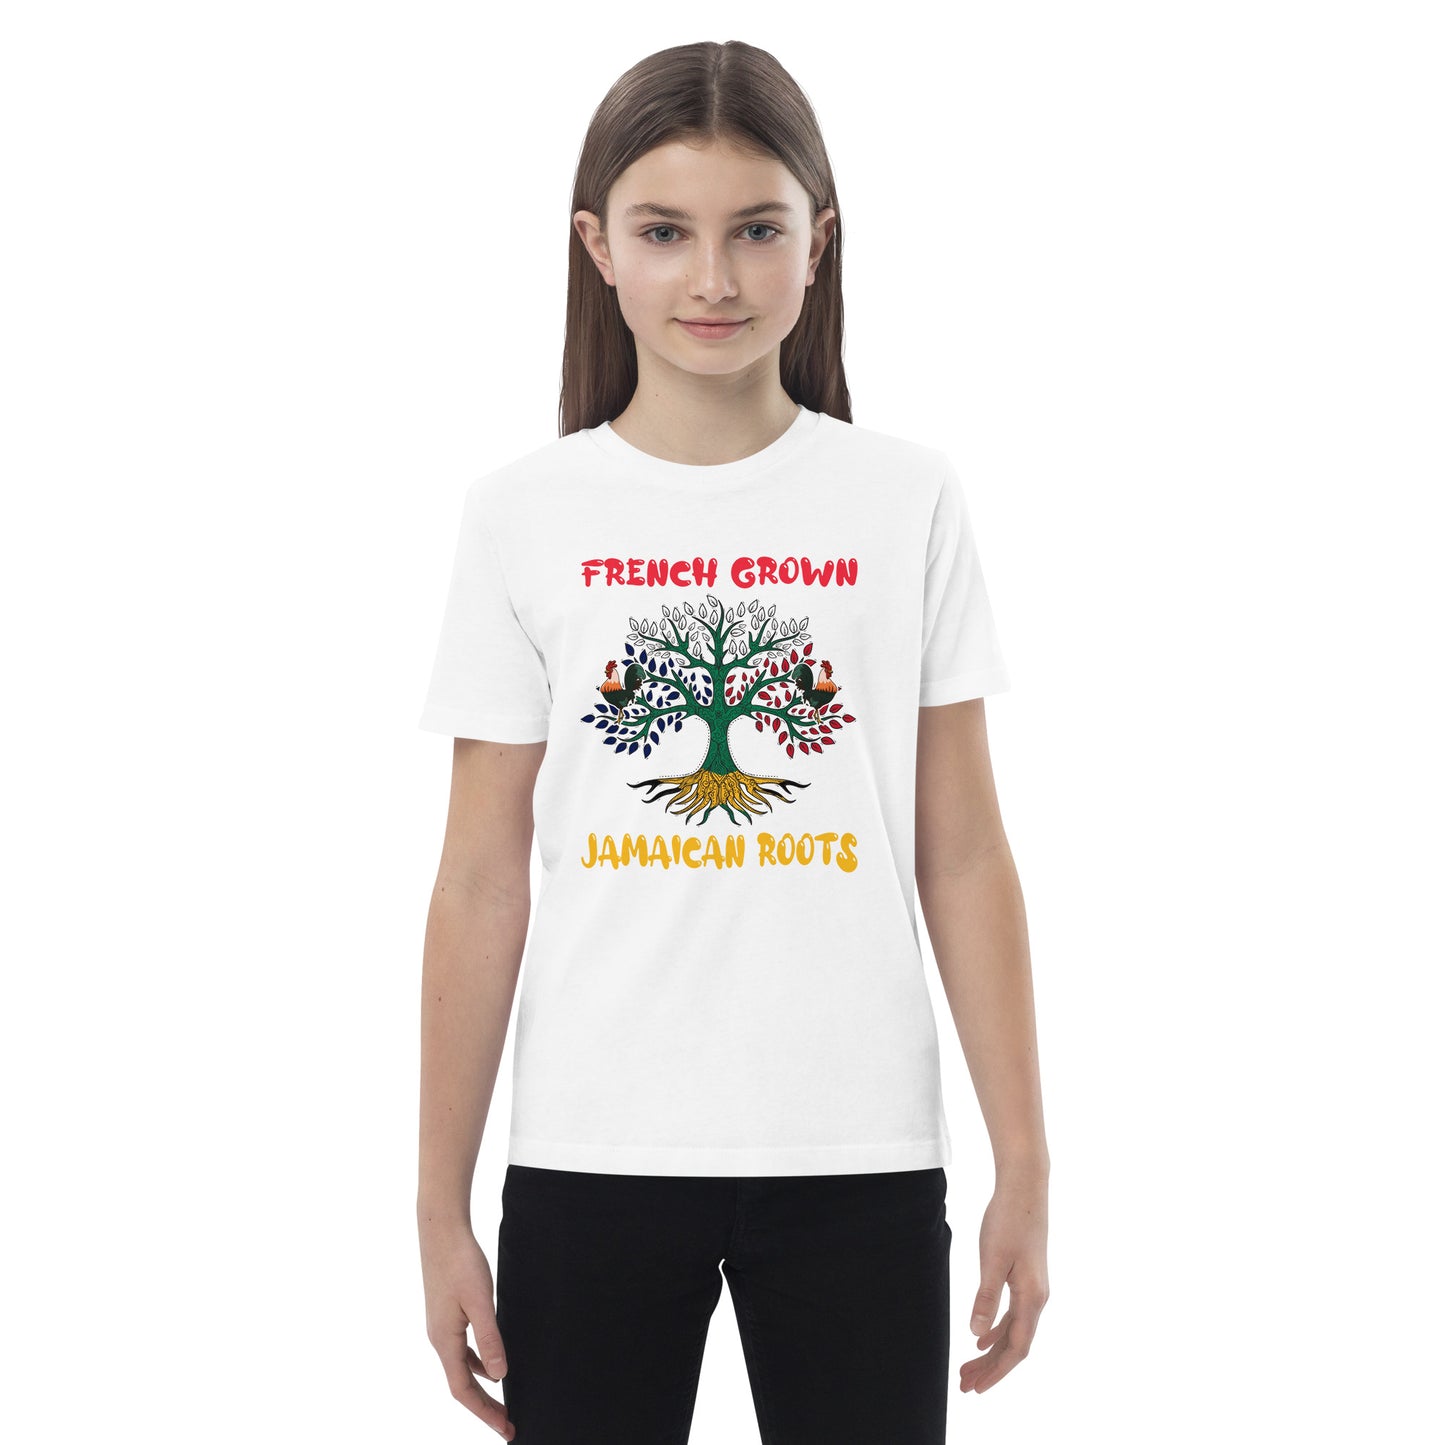 Organic cotton kids "French Grown" t-shirt